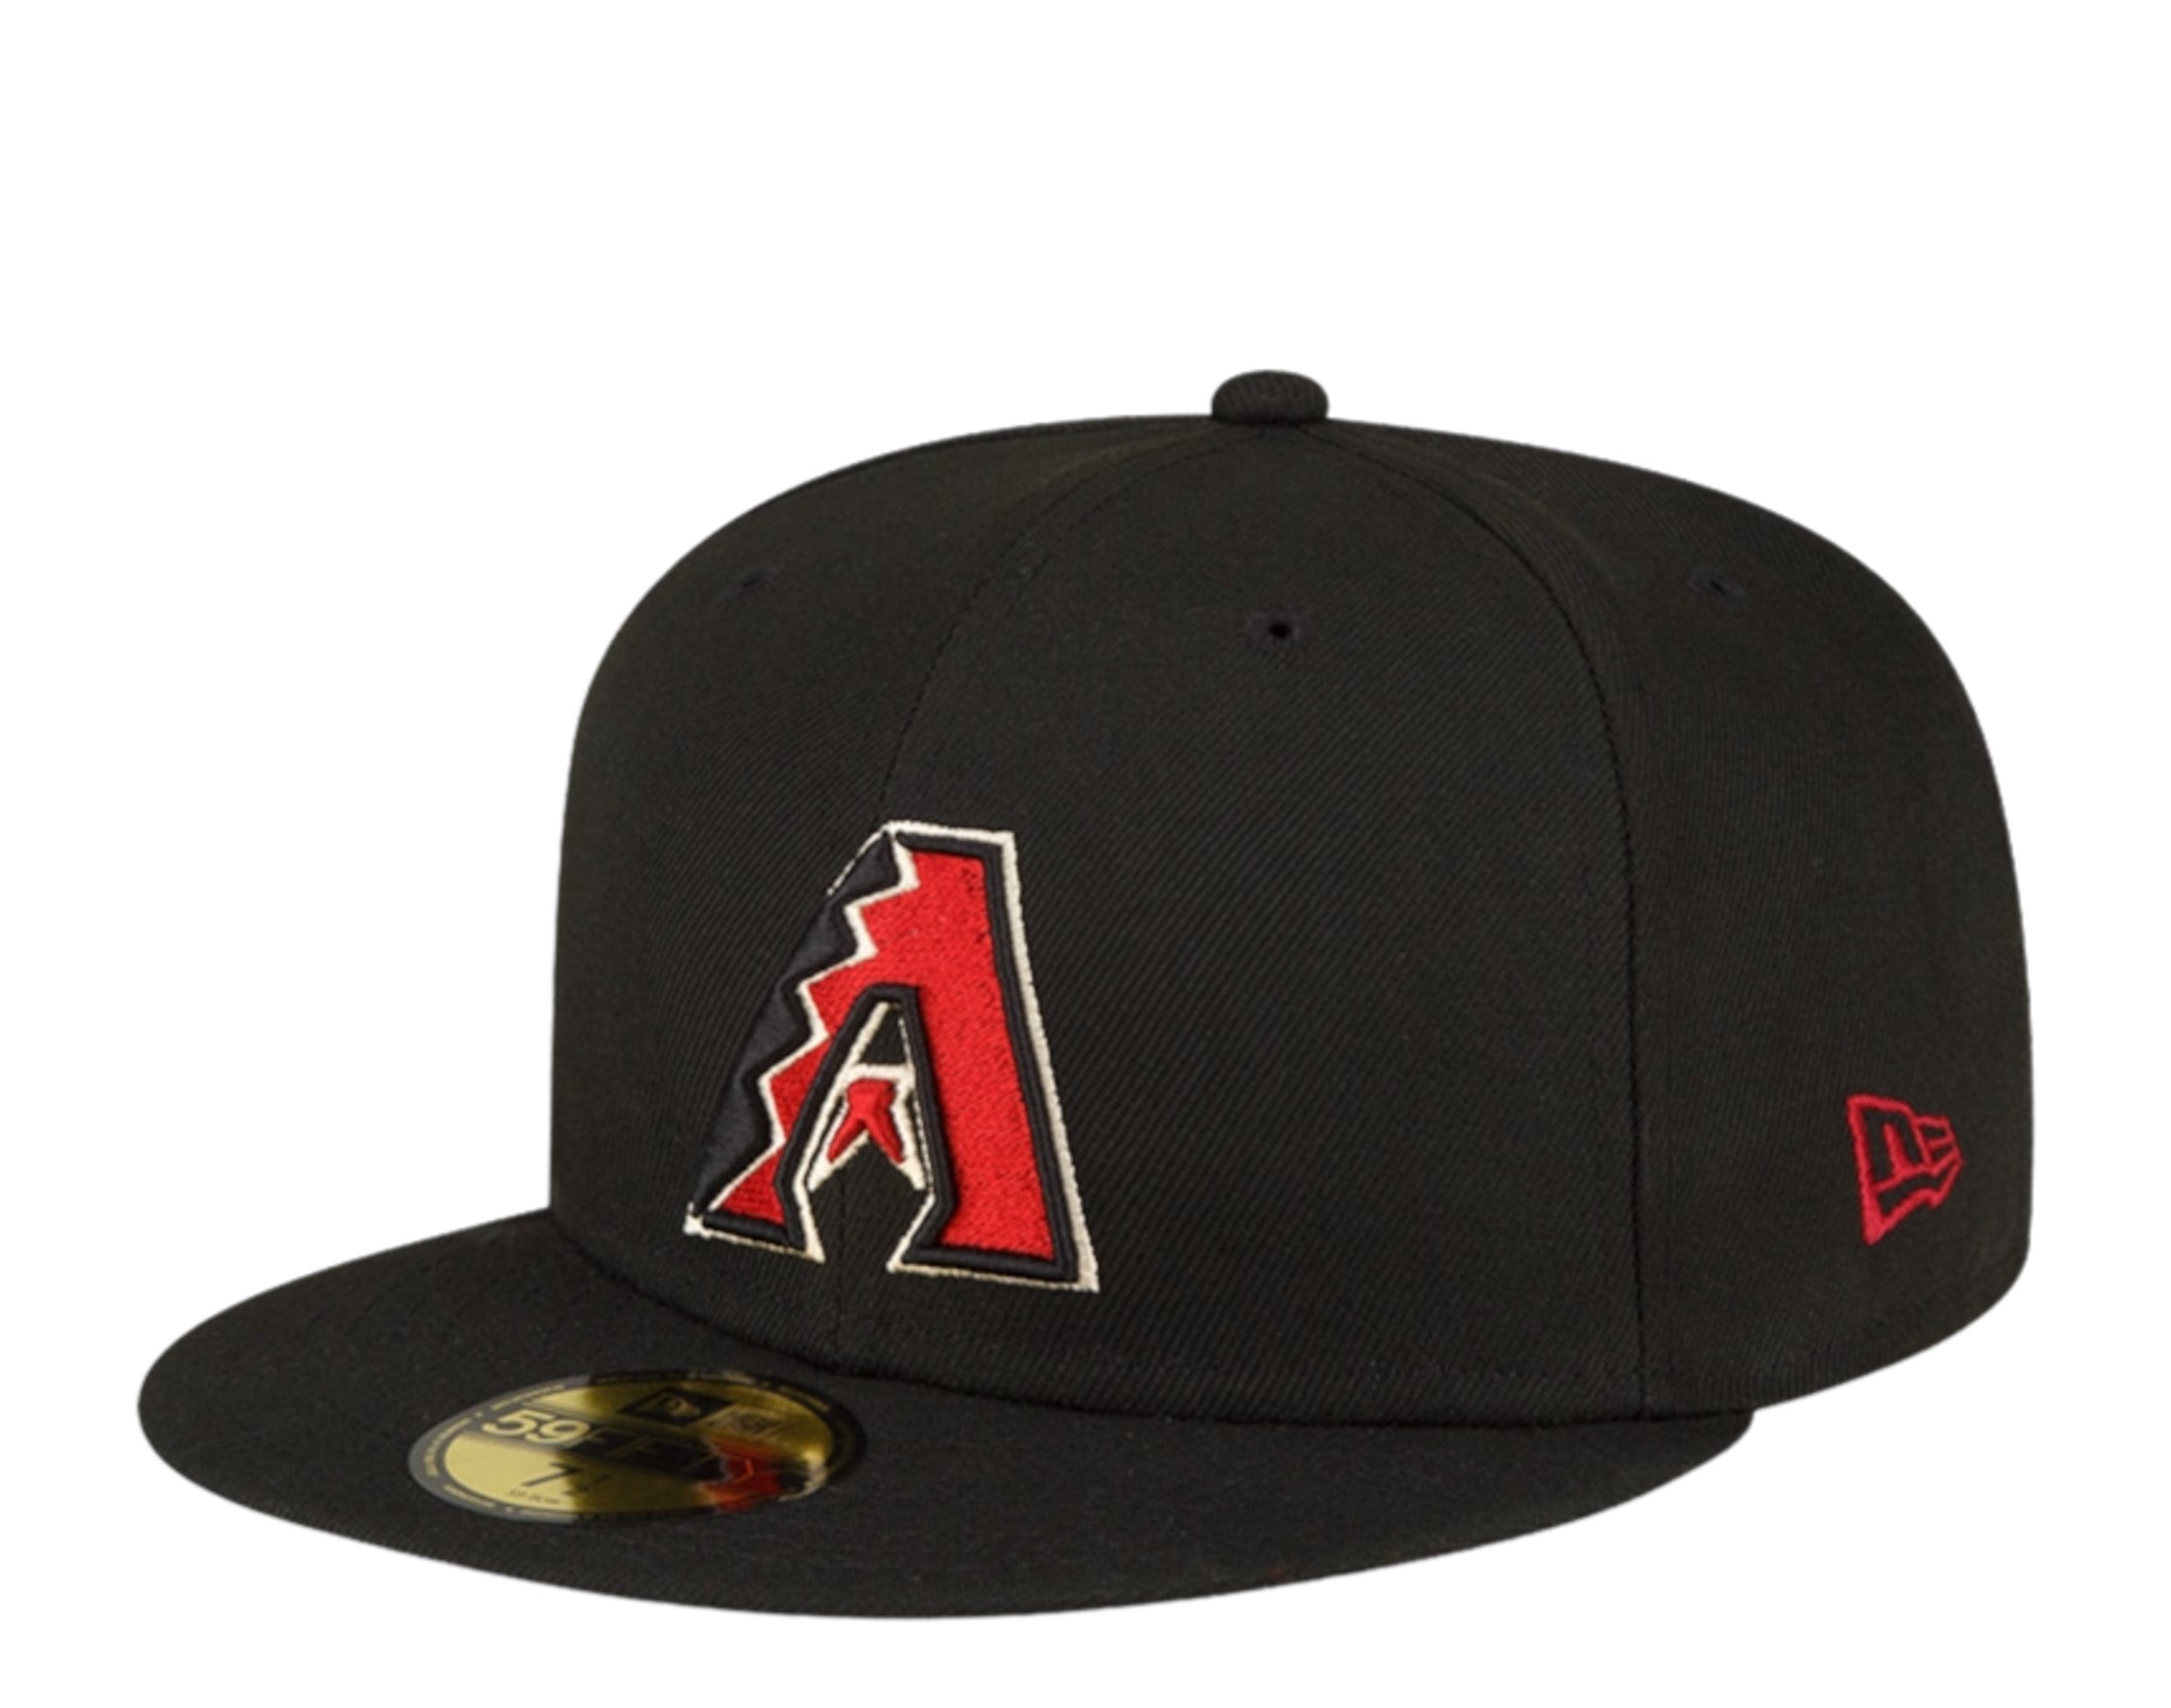 New Era 59FIFTY MLB Arizona Diamondbacks OTC Fitted Hat 7